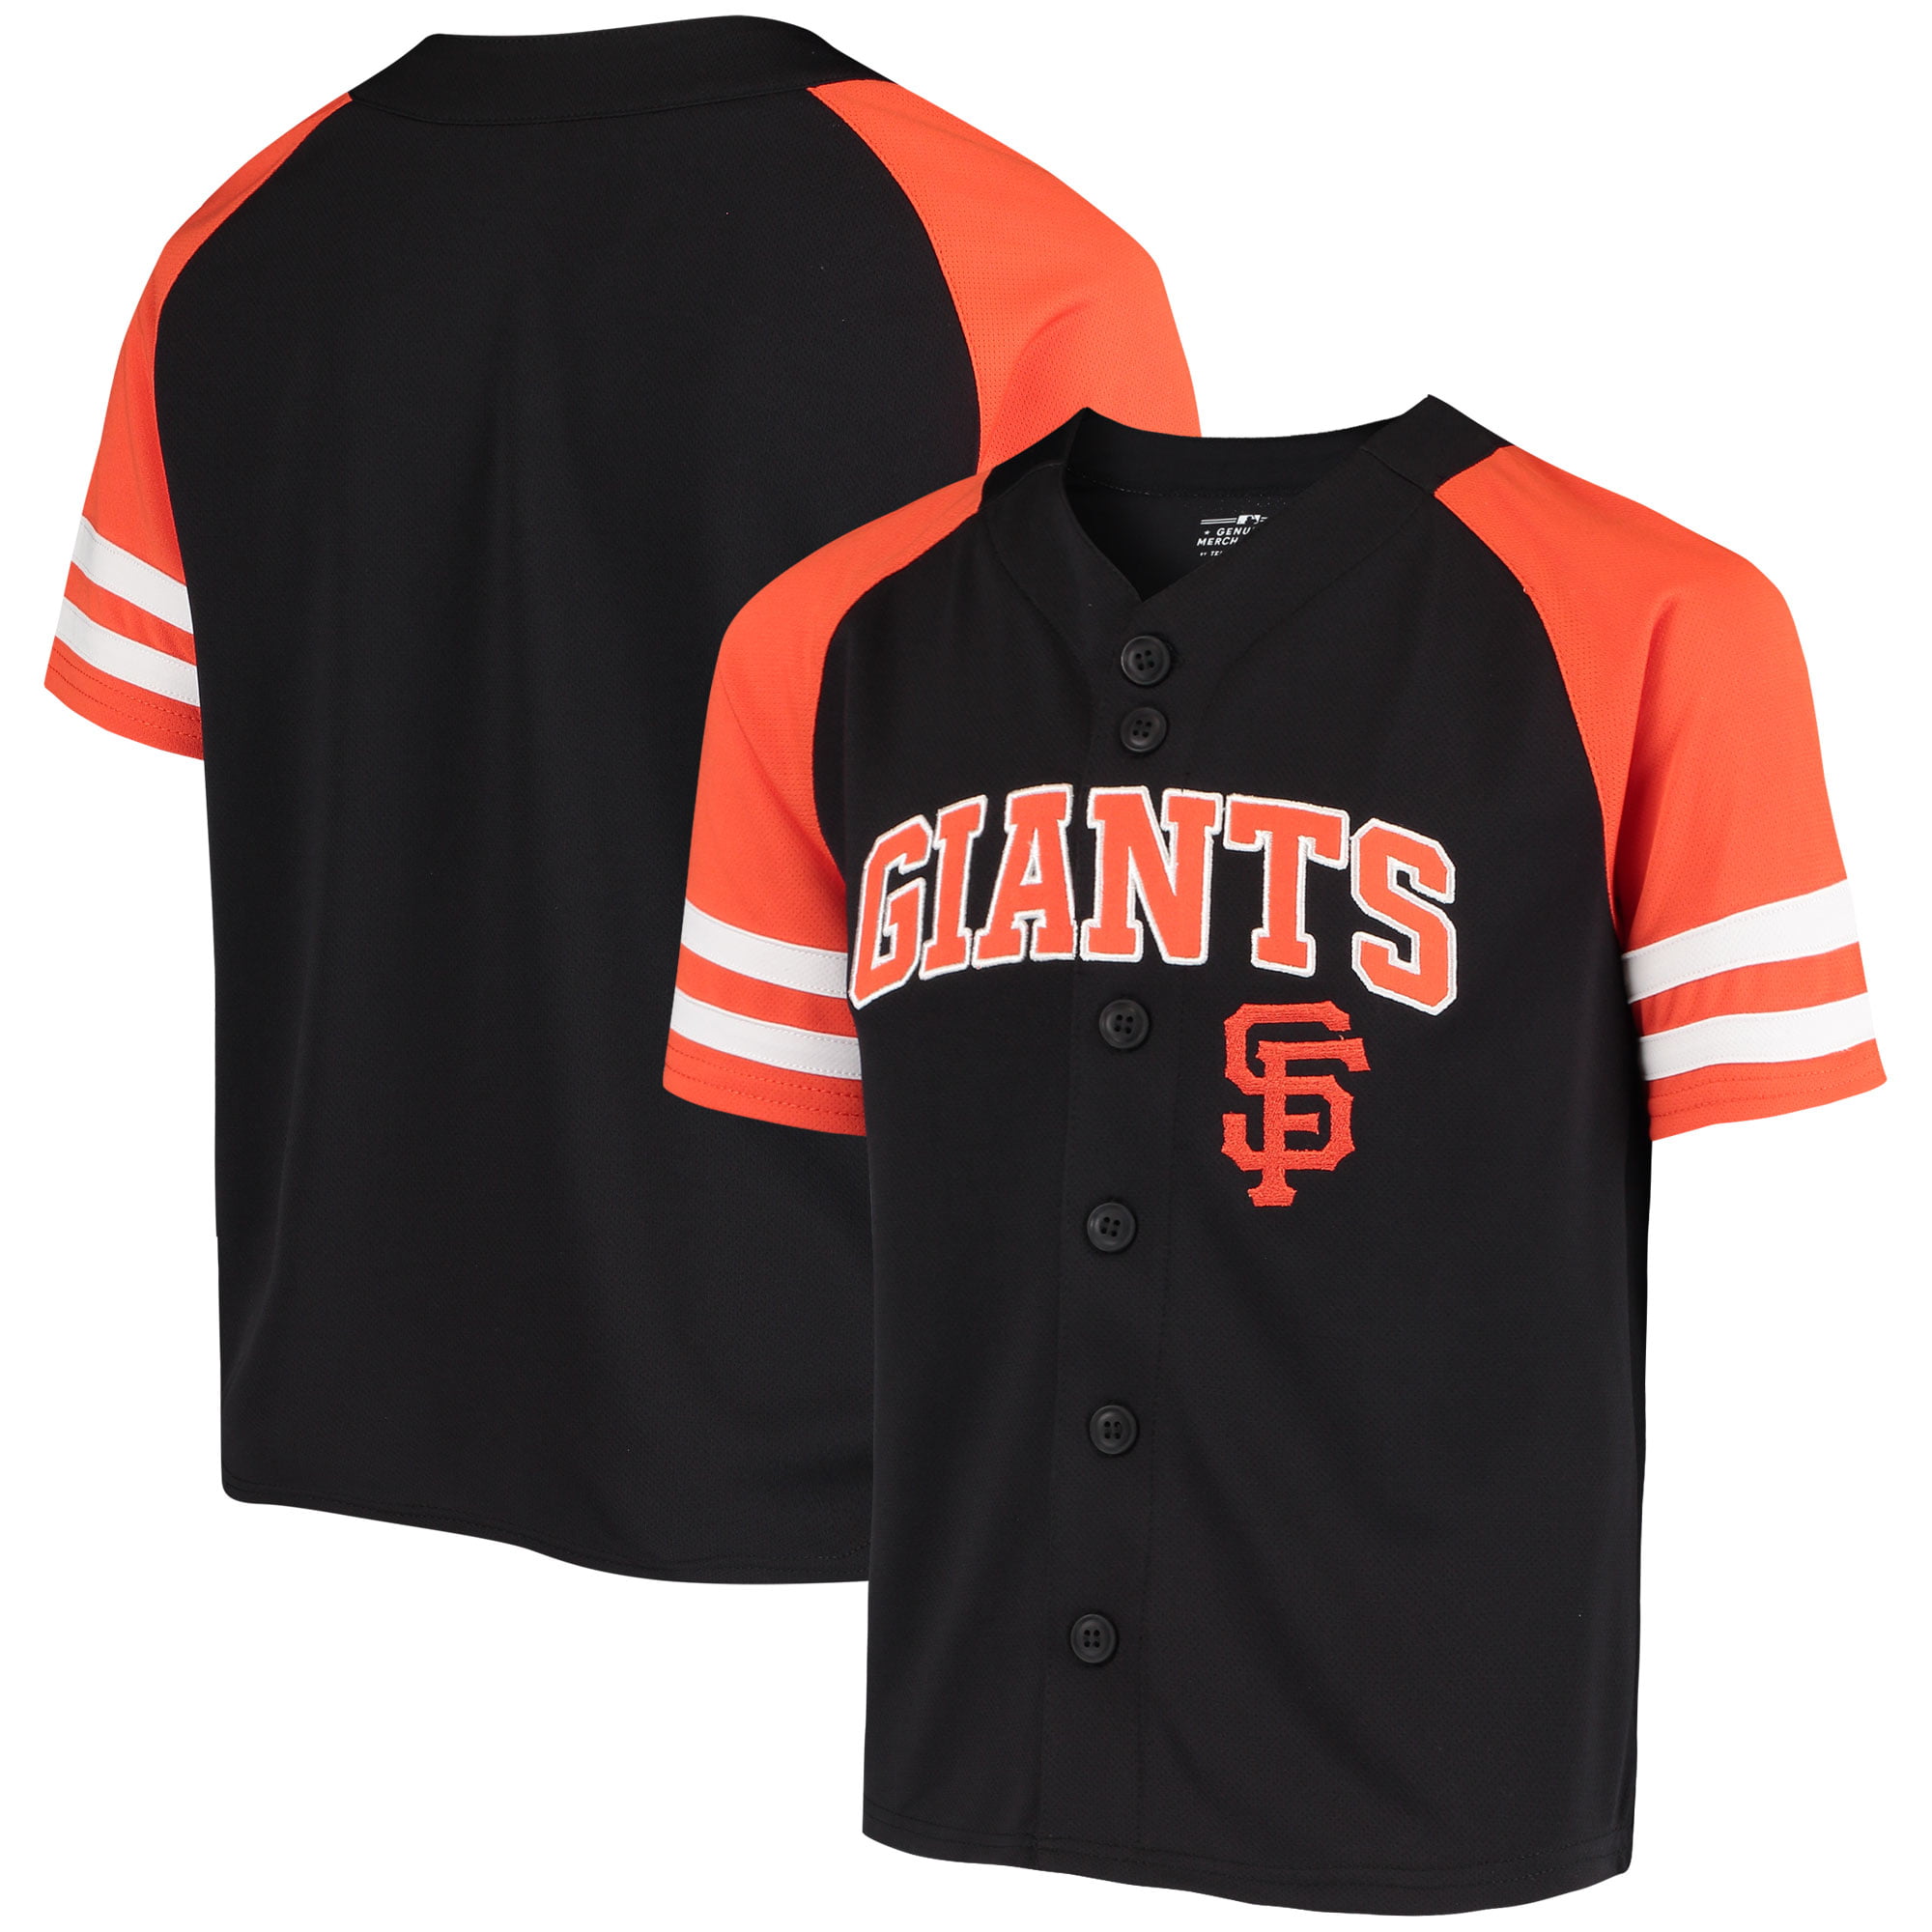 San Francisco Giants Youth Team Jersey - Black/Orange - Walmart.com - Walmart.com